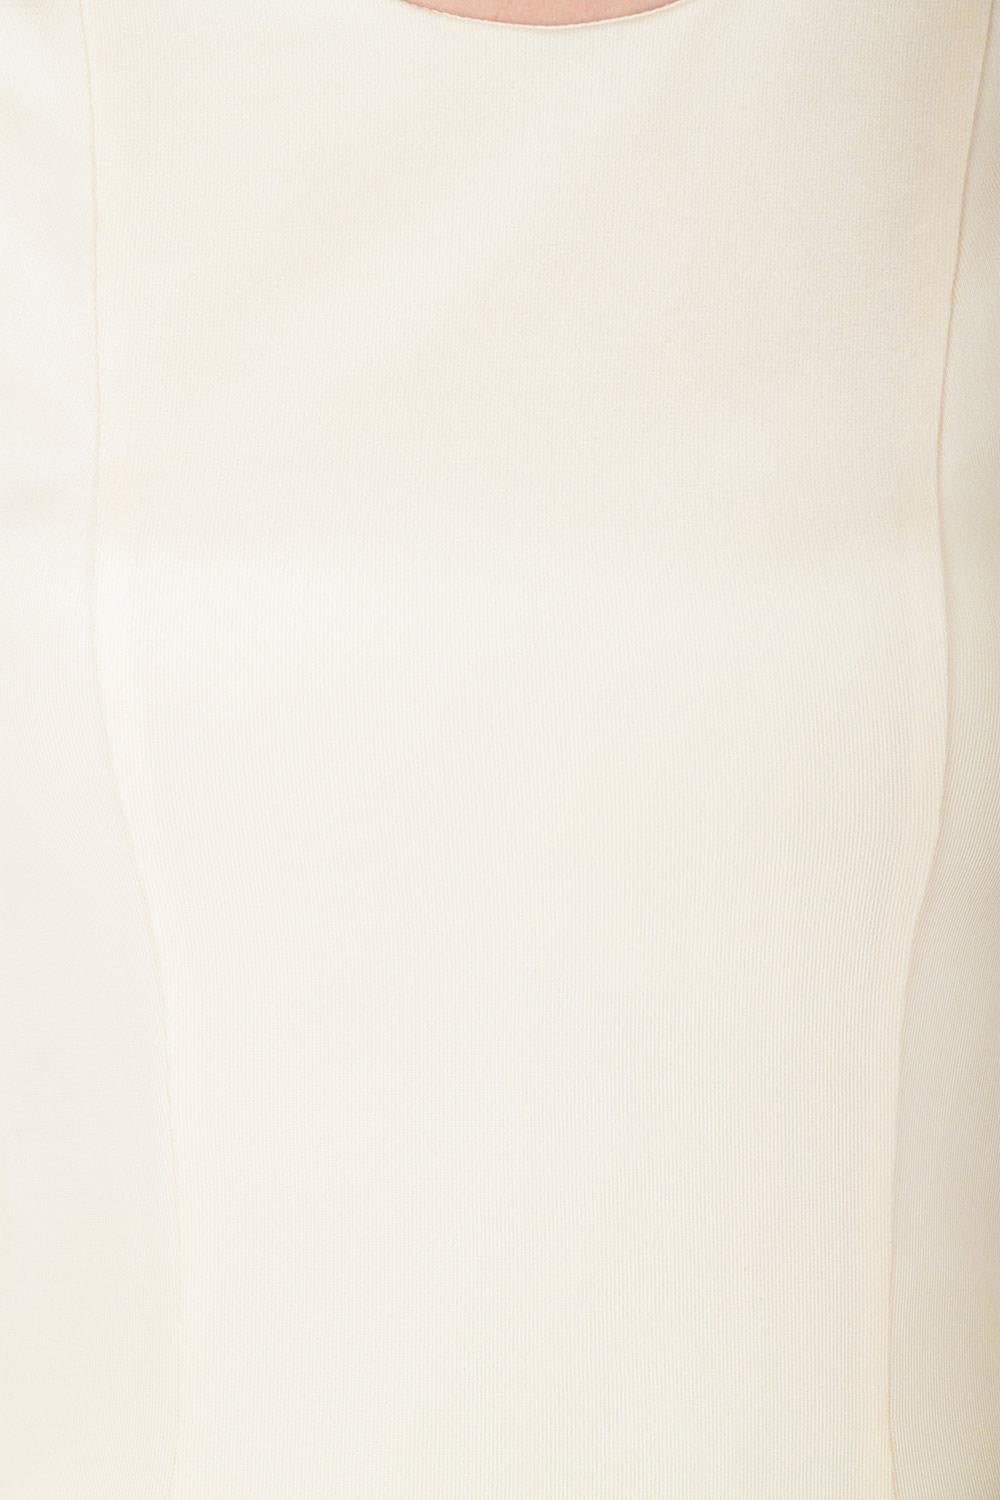 Versace Cream Knit Rose Gold Medusa Button Detail Sleeveless Fitted Dress M 1